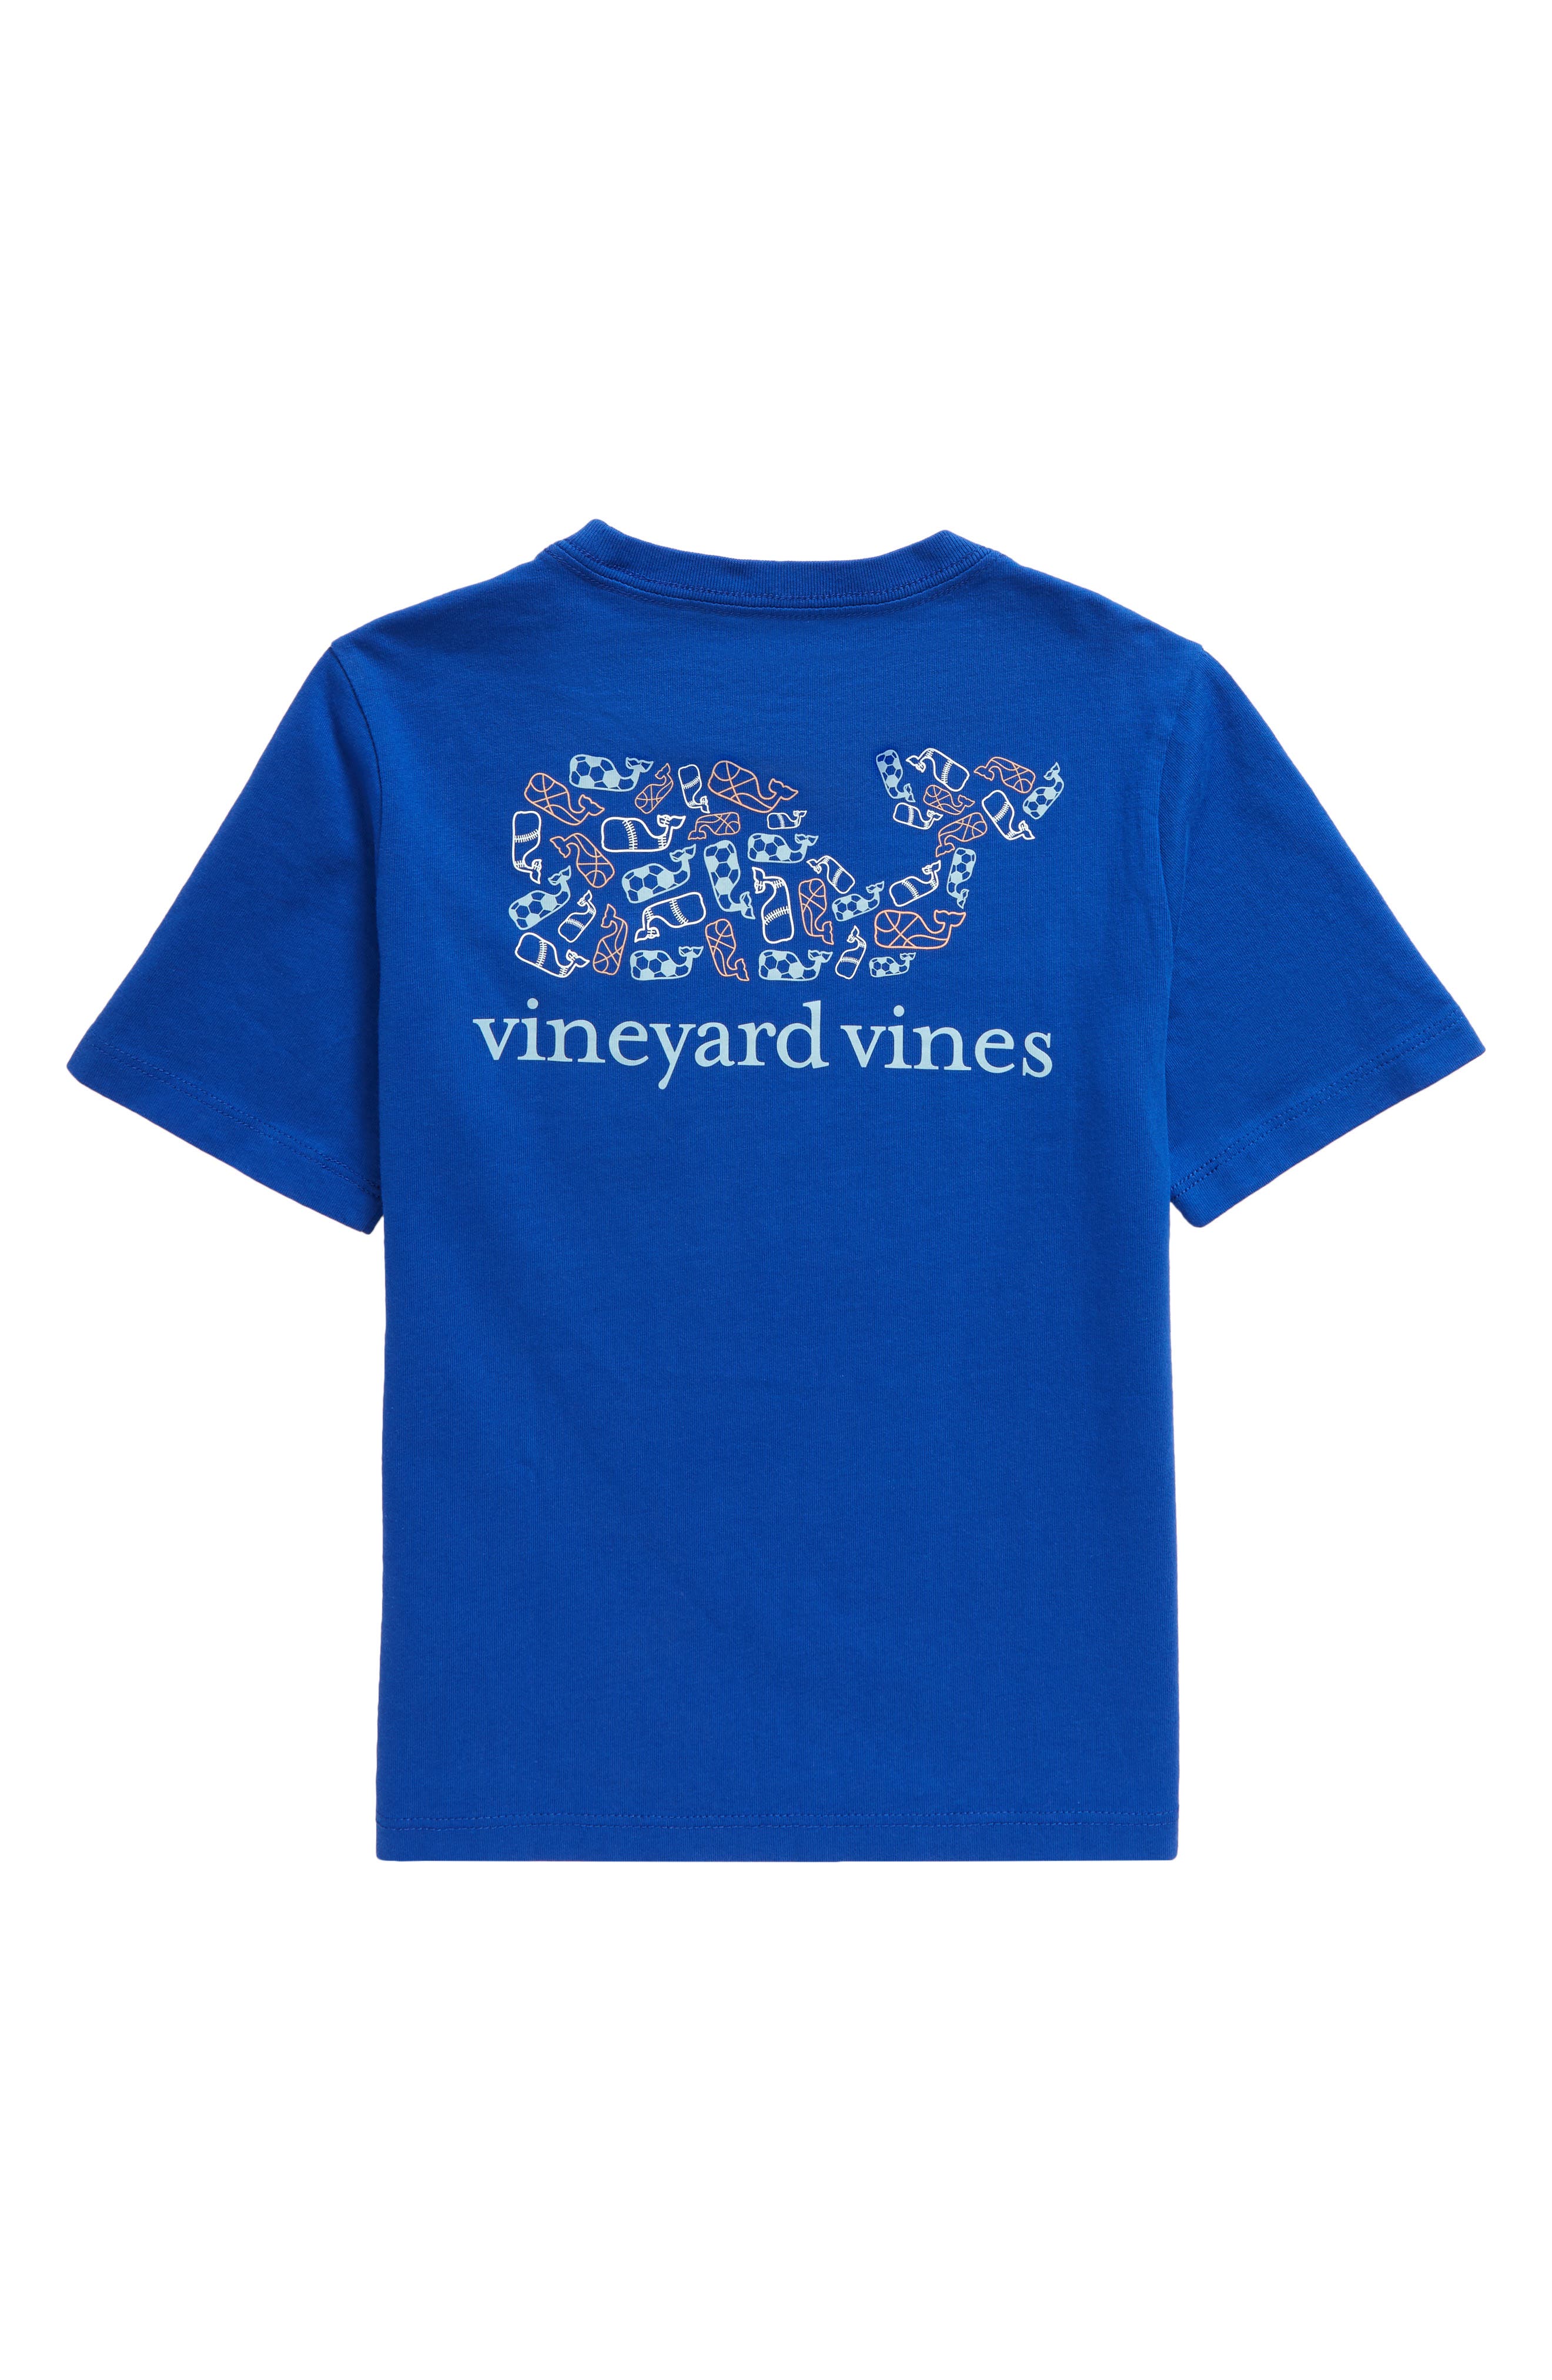 Vineyard Vines Lobster Bake Short Sleeve T-Shirt